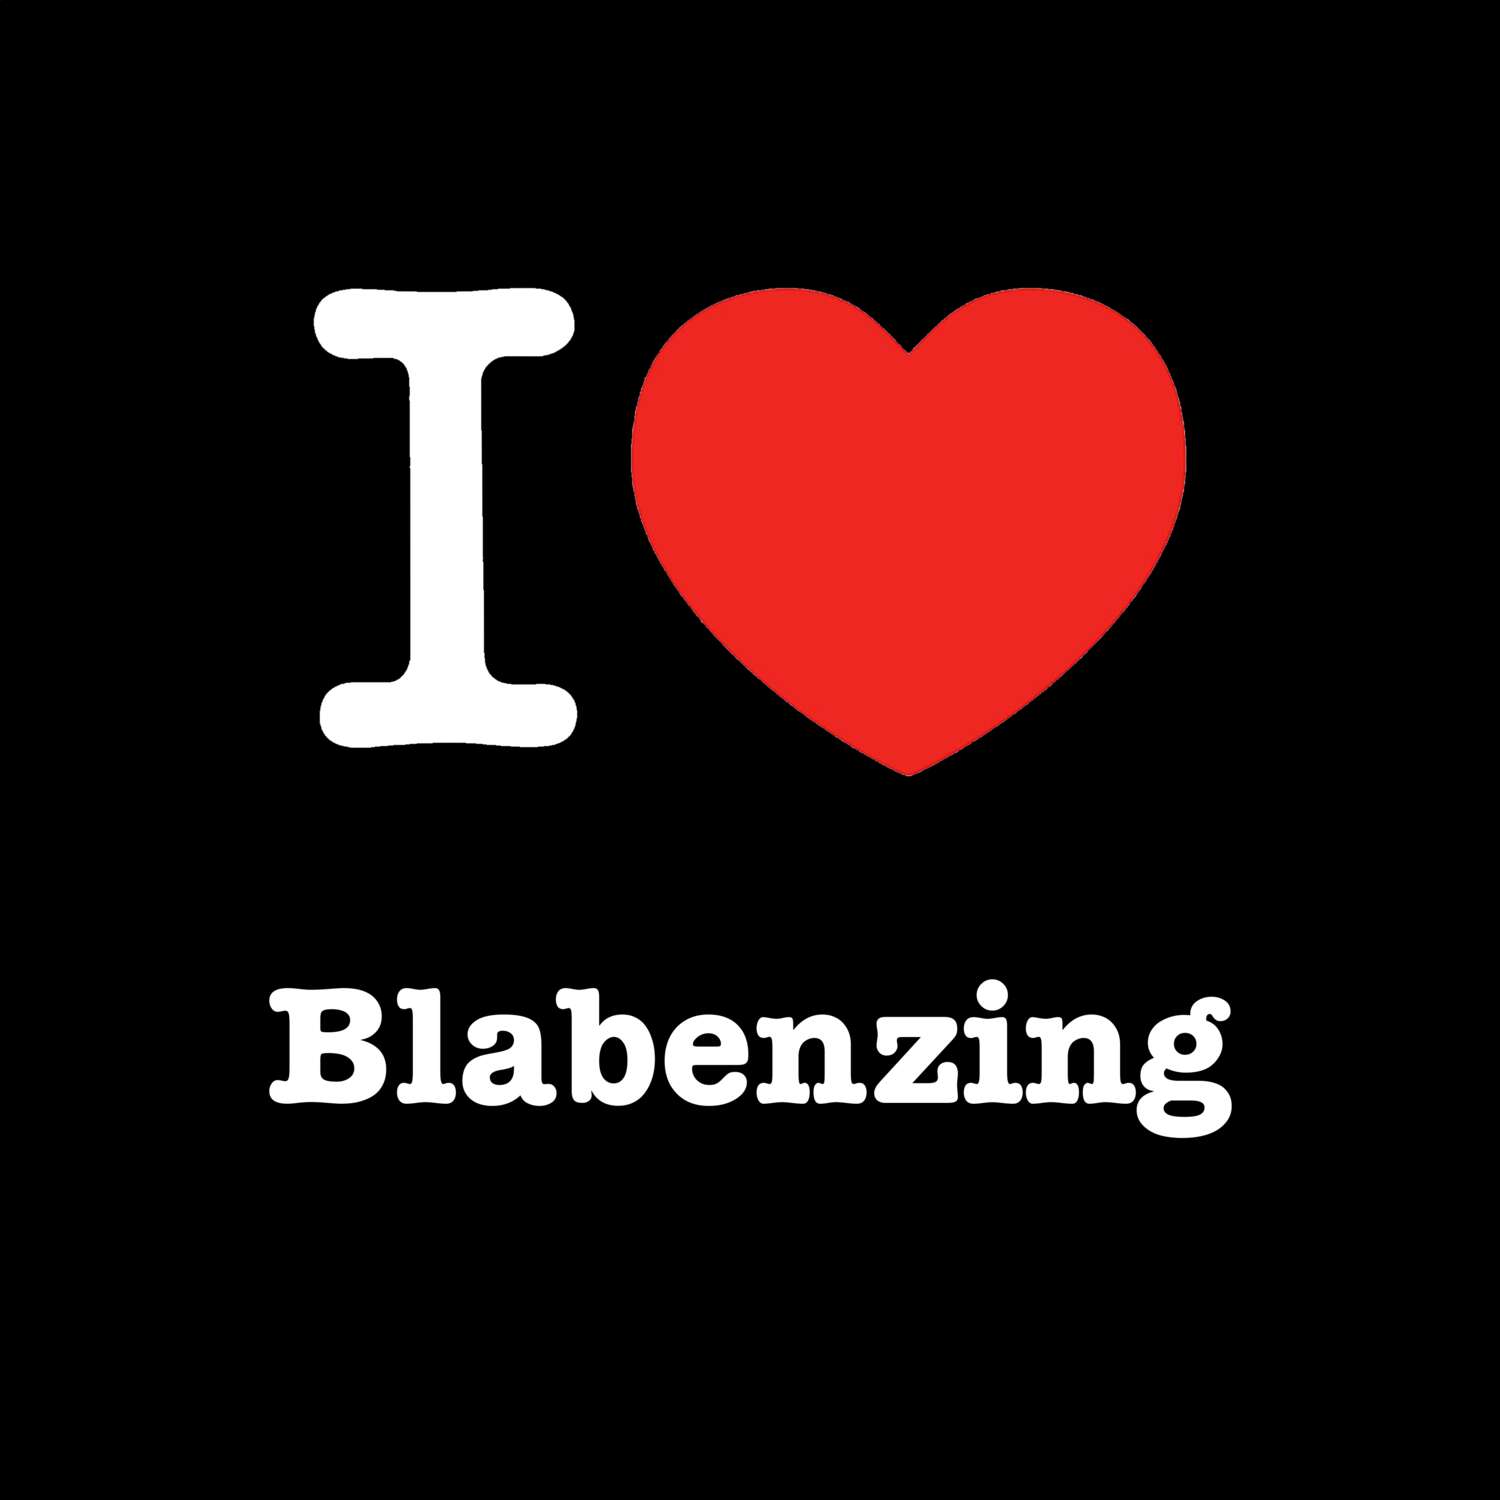 Blabenzing T-Shirt »I love«